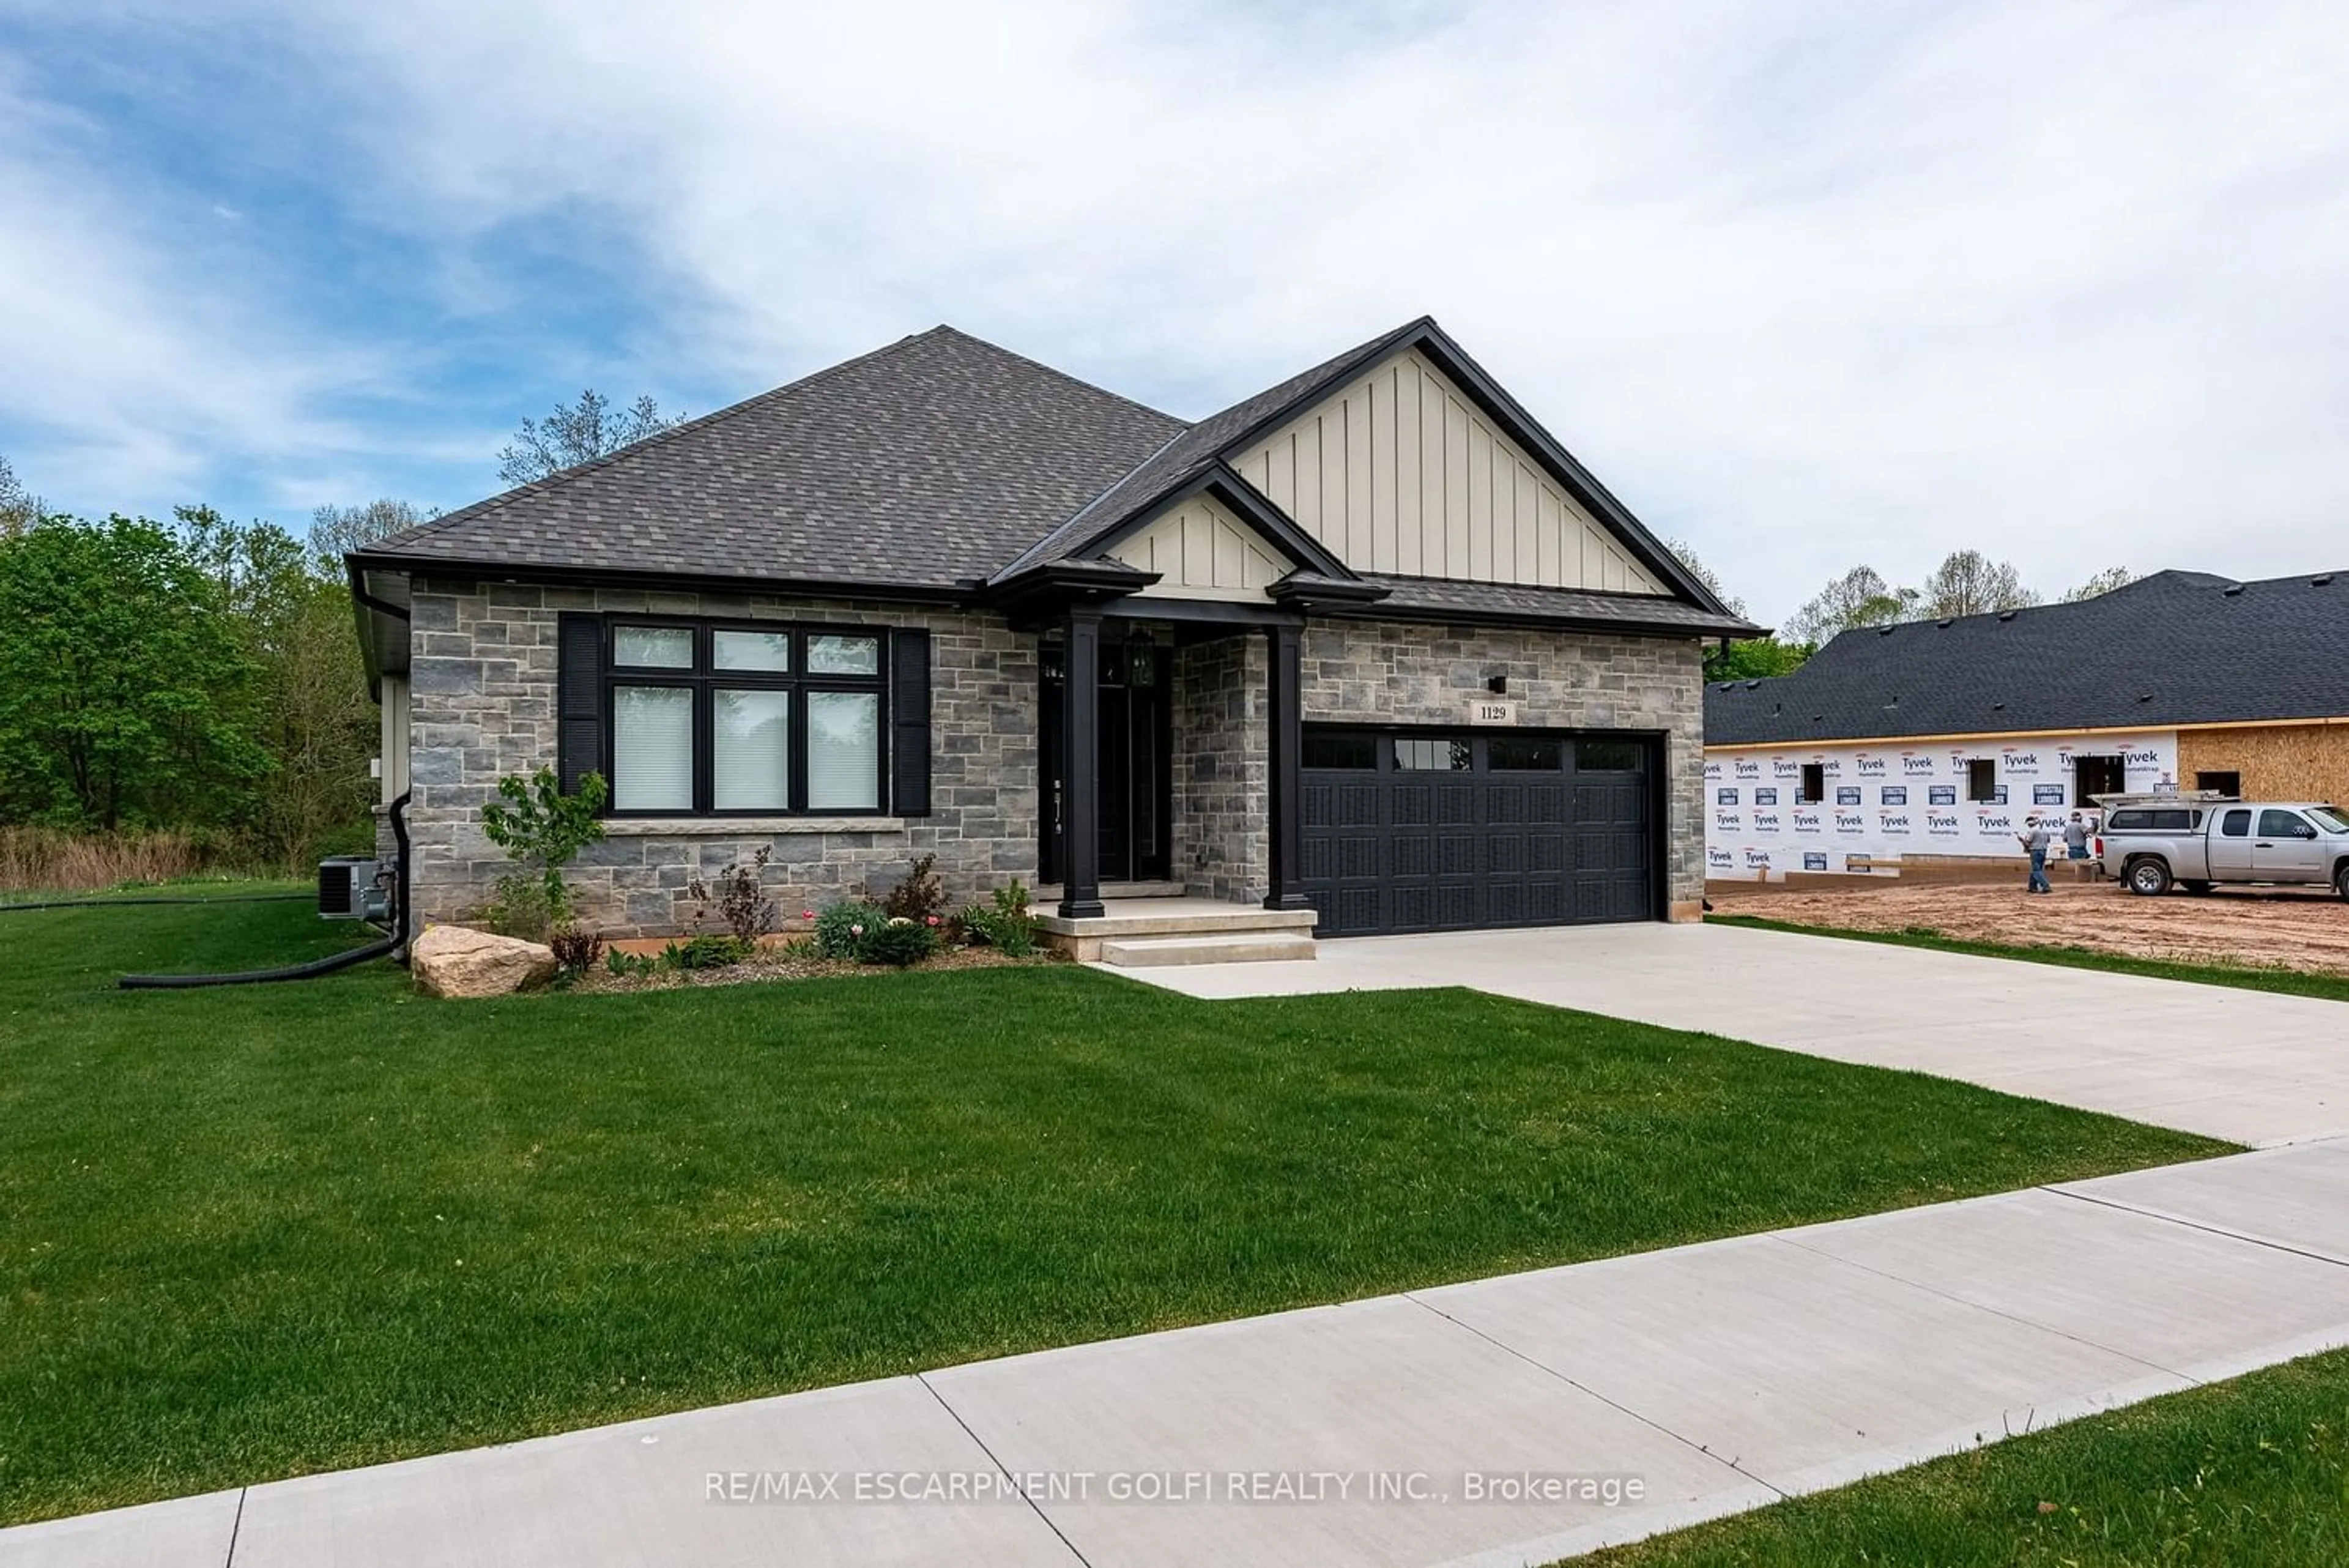 Home with brick exterior material for 1129 Balfour St, Pelham Ontario L0S 1C0